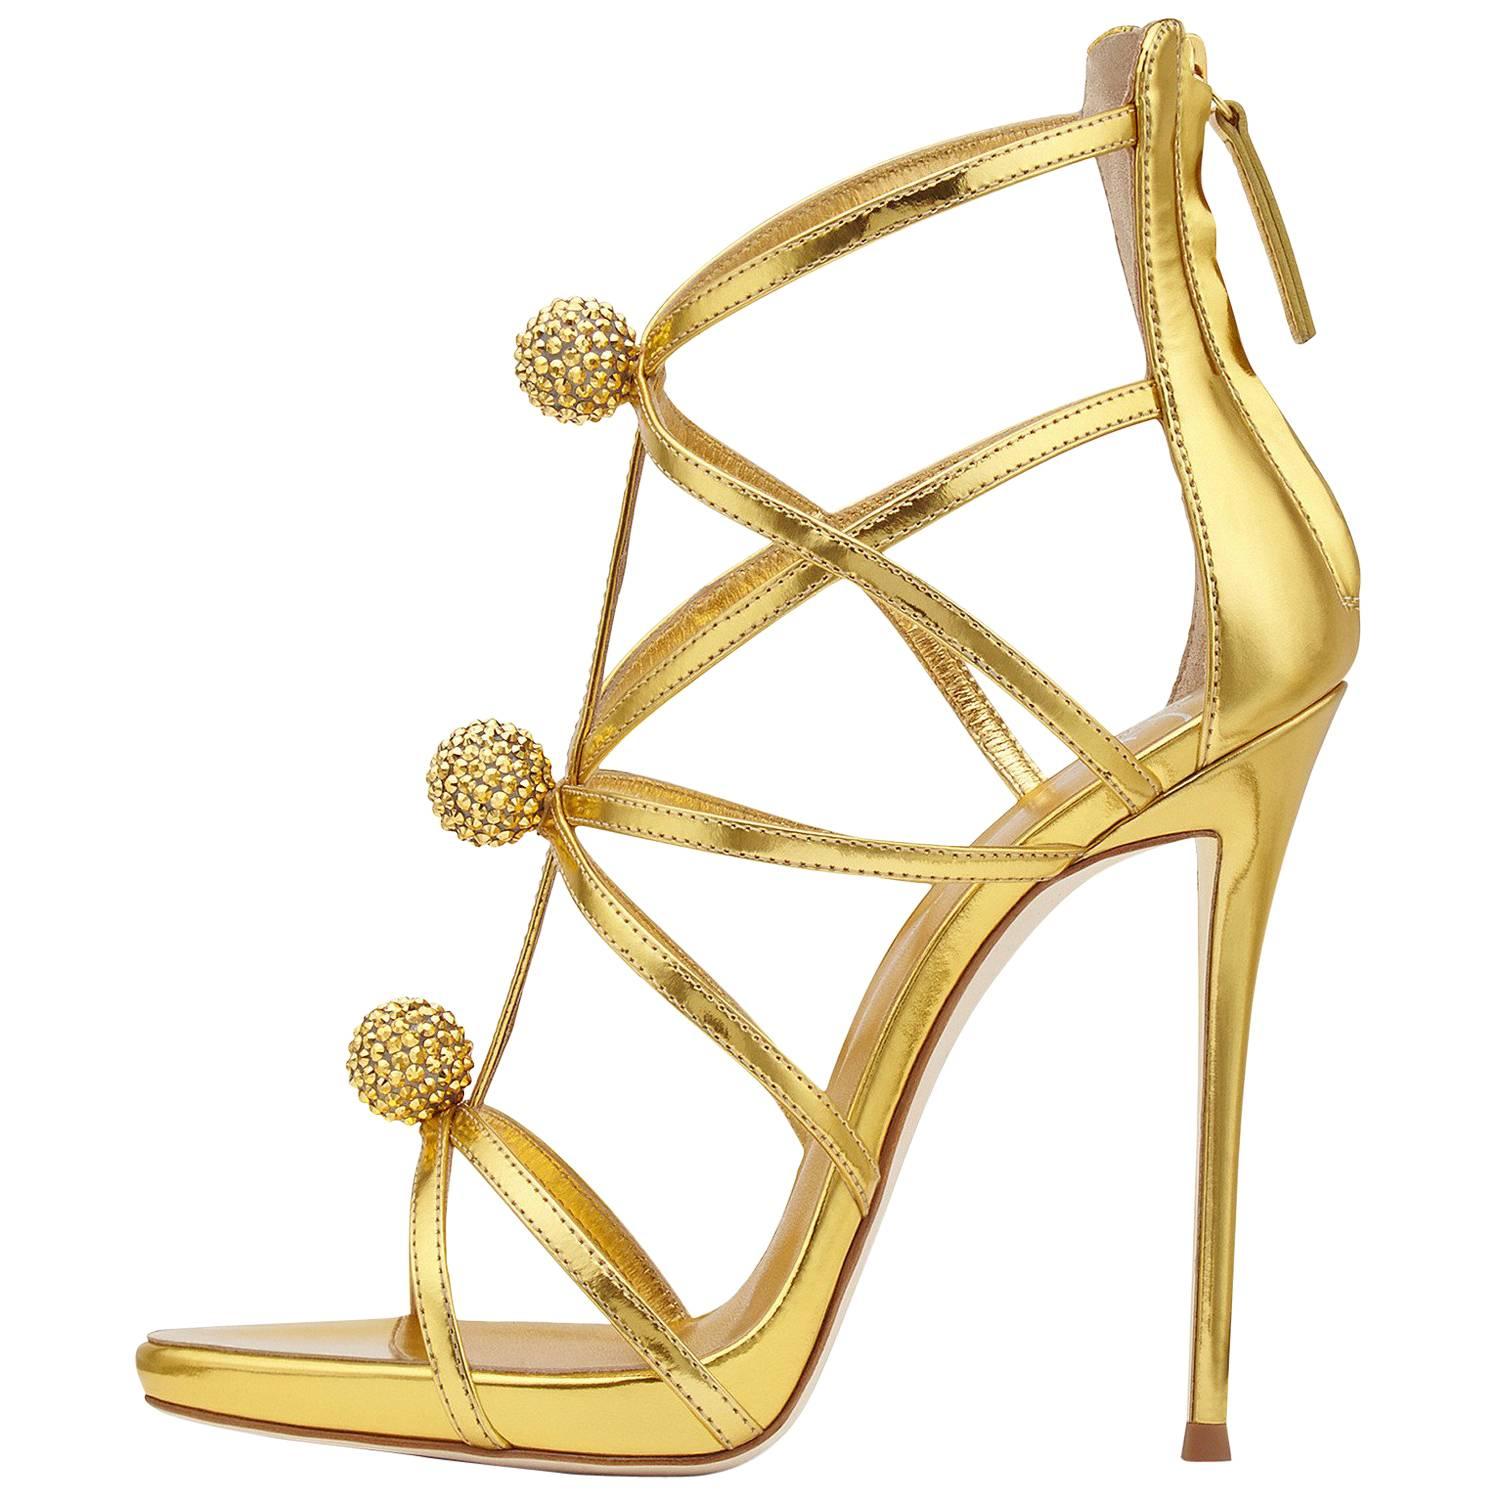 Giuseppe Zanotti New Gold Leather Crystal PomPom Heels in Box